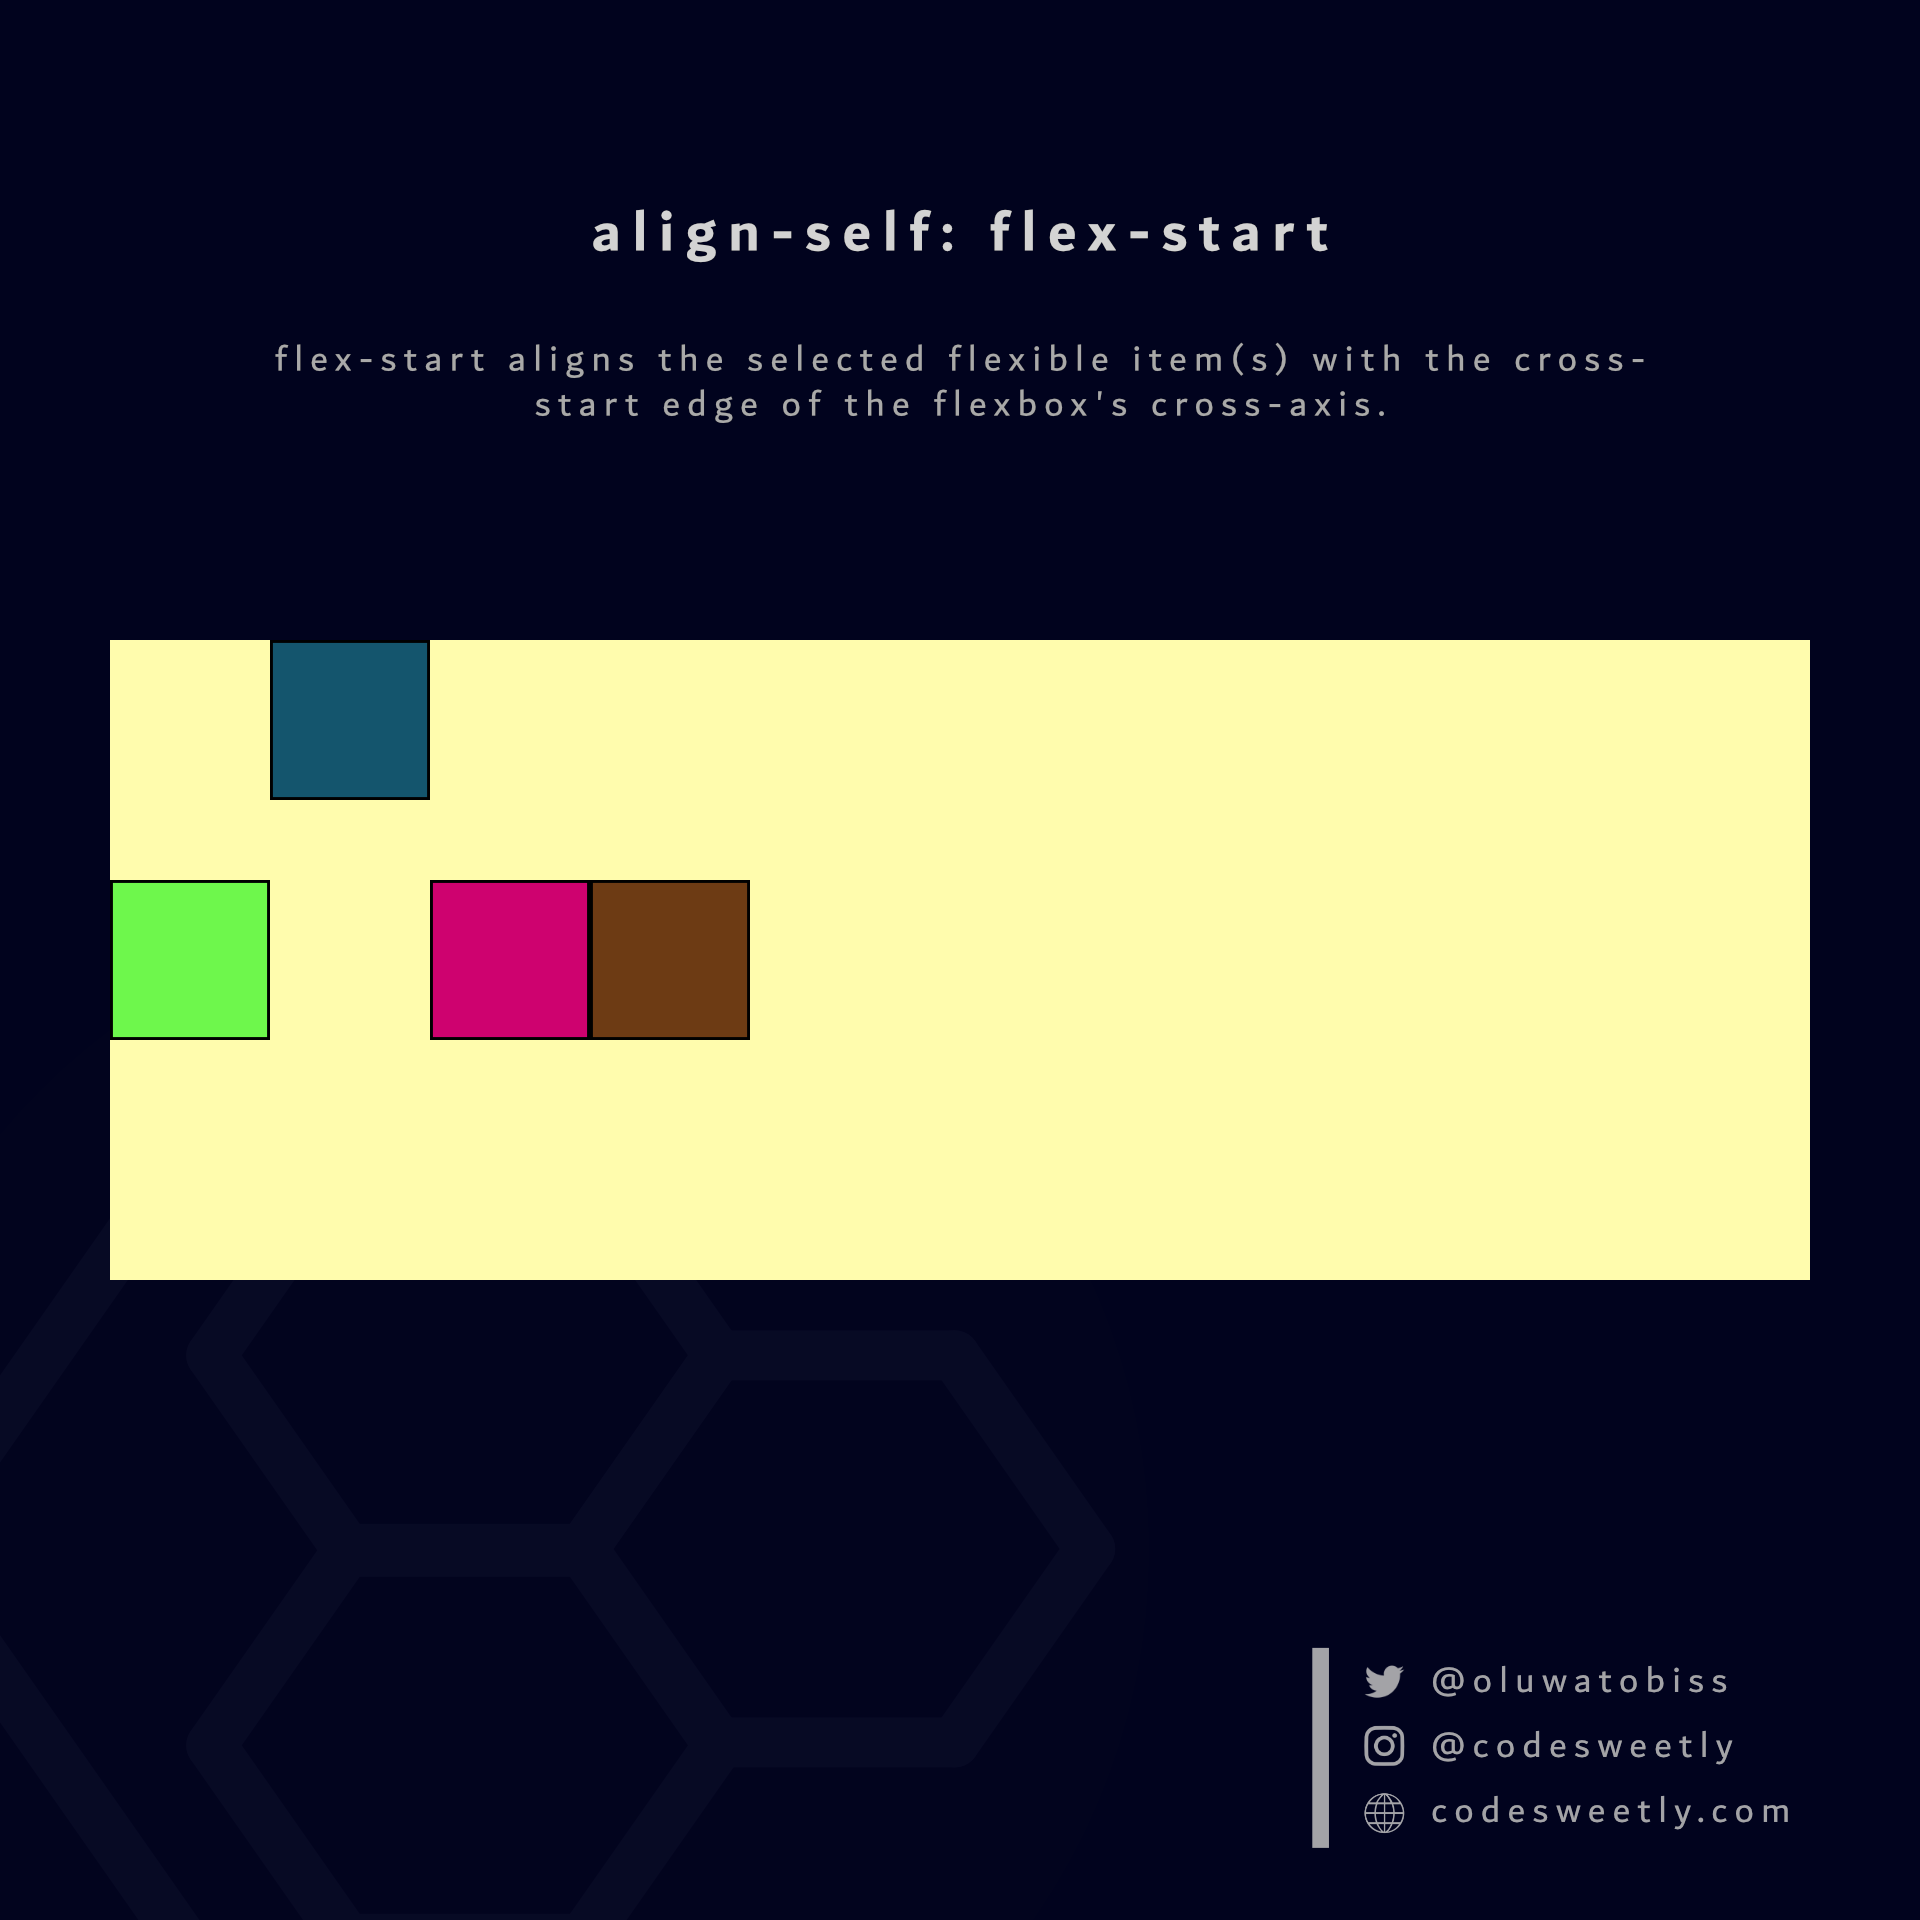 align-self's flex-start value aligns selected flexible items to the cross-start edge of the flexbox's cross-axis